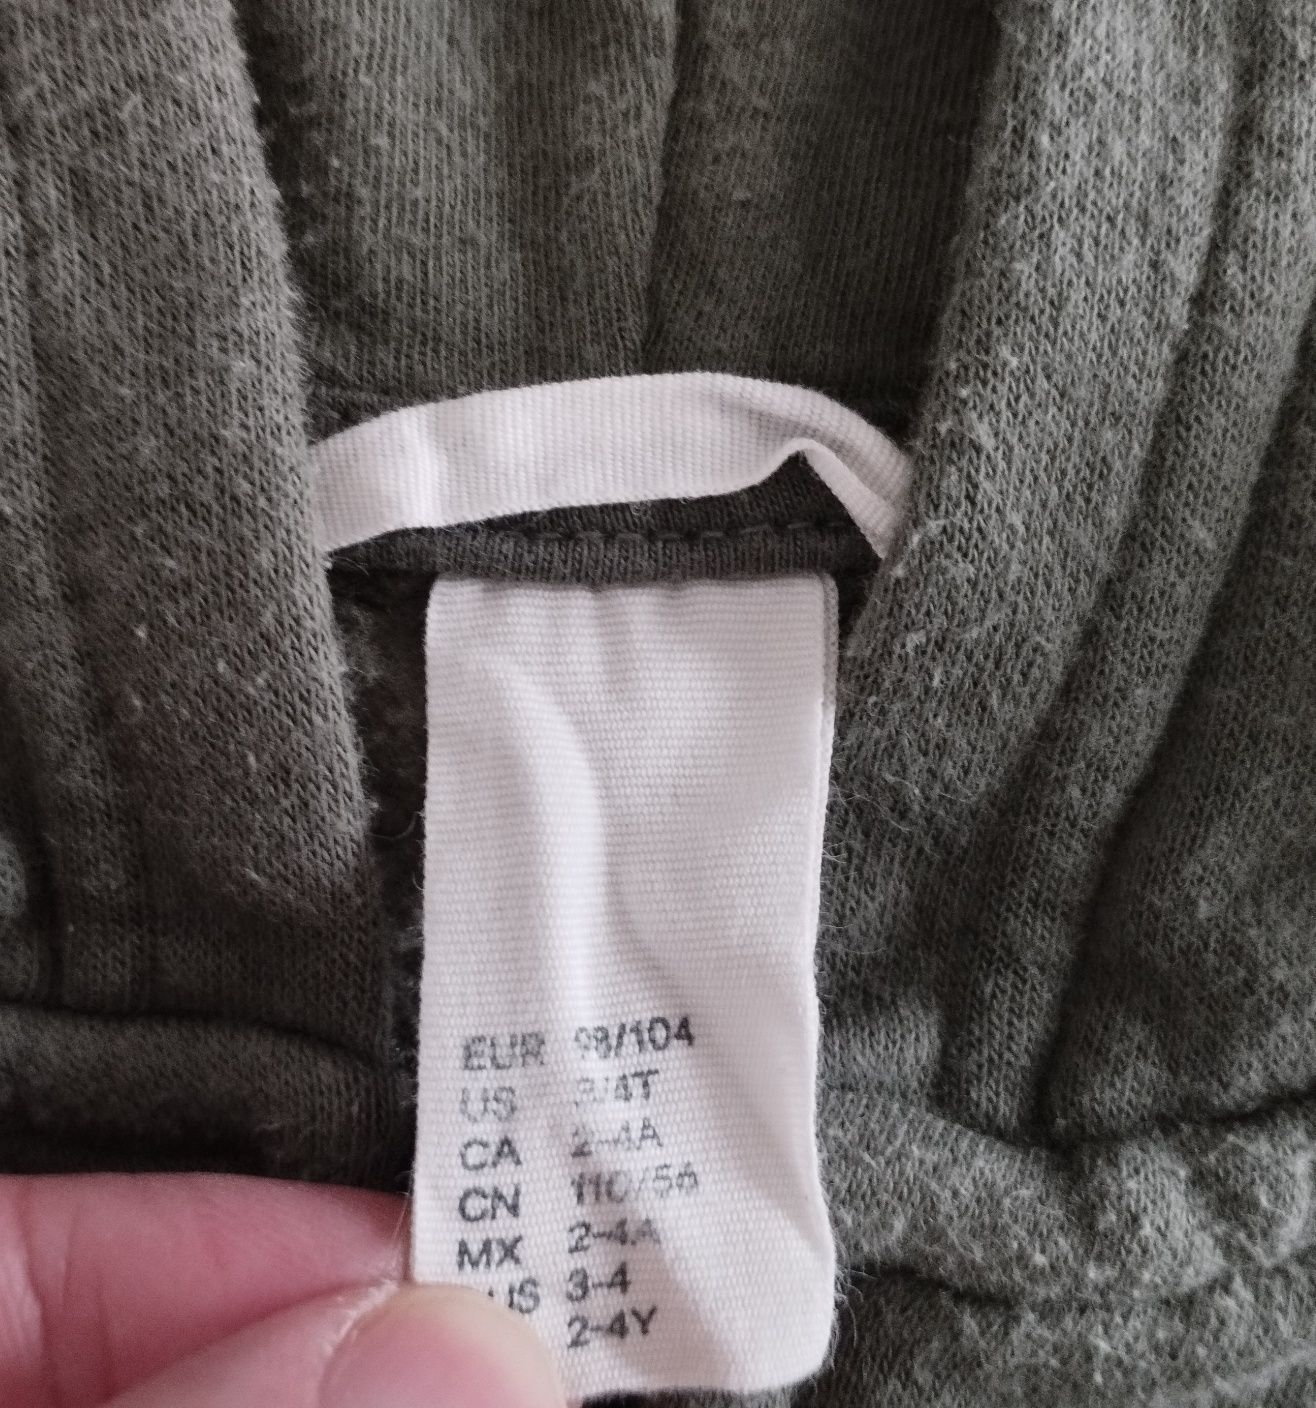 Bluza H&M i koszula Zara - R.104